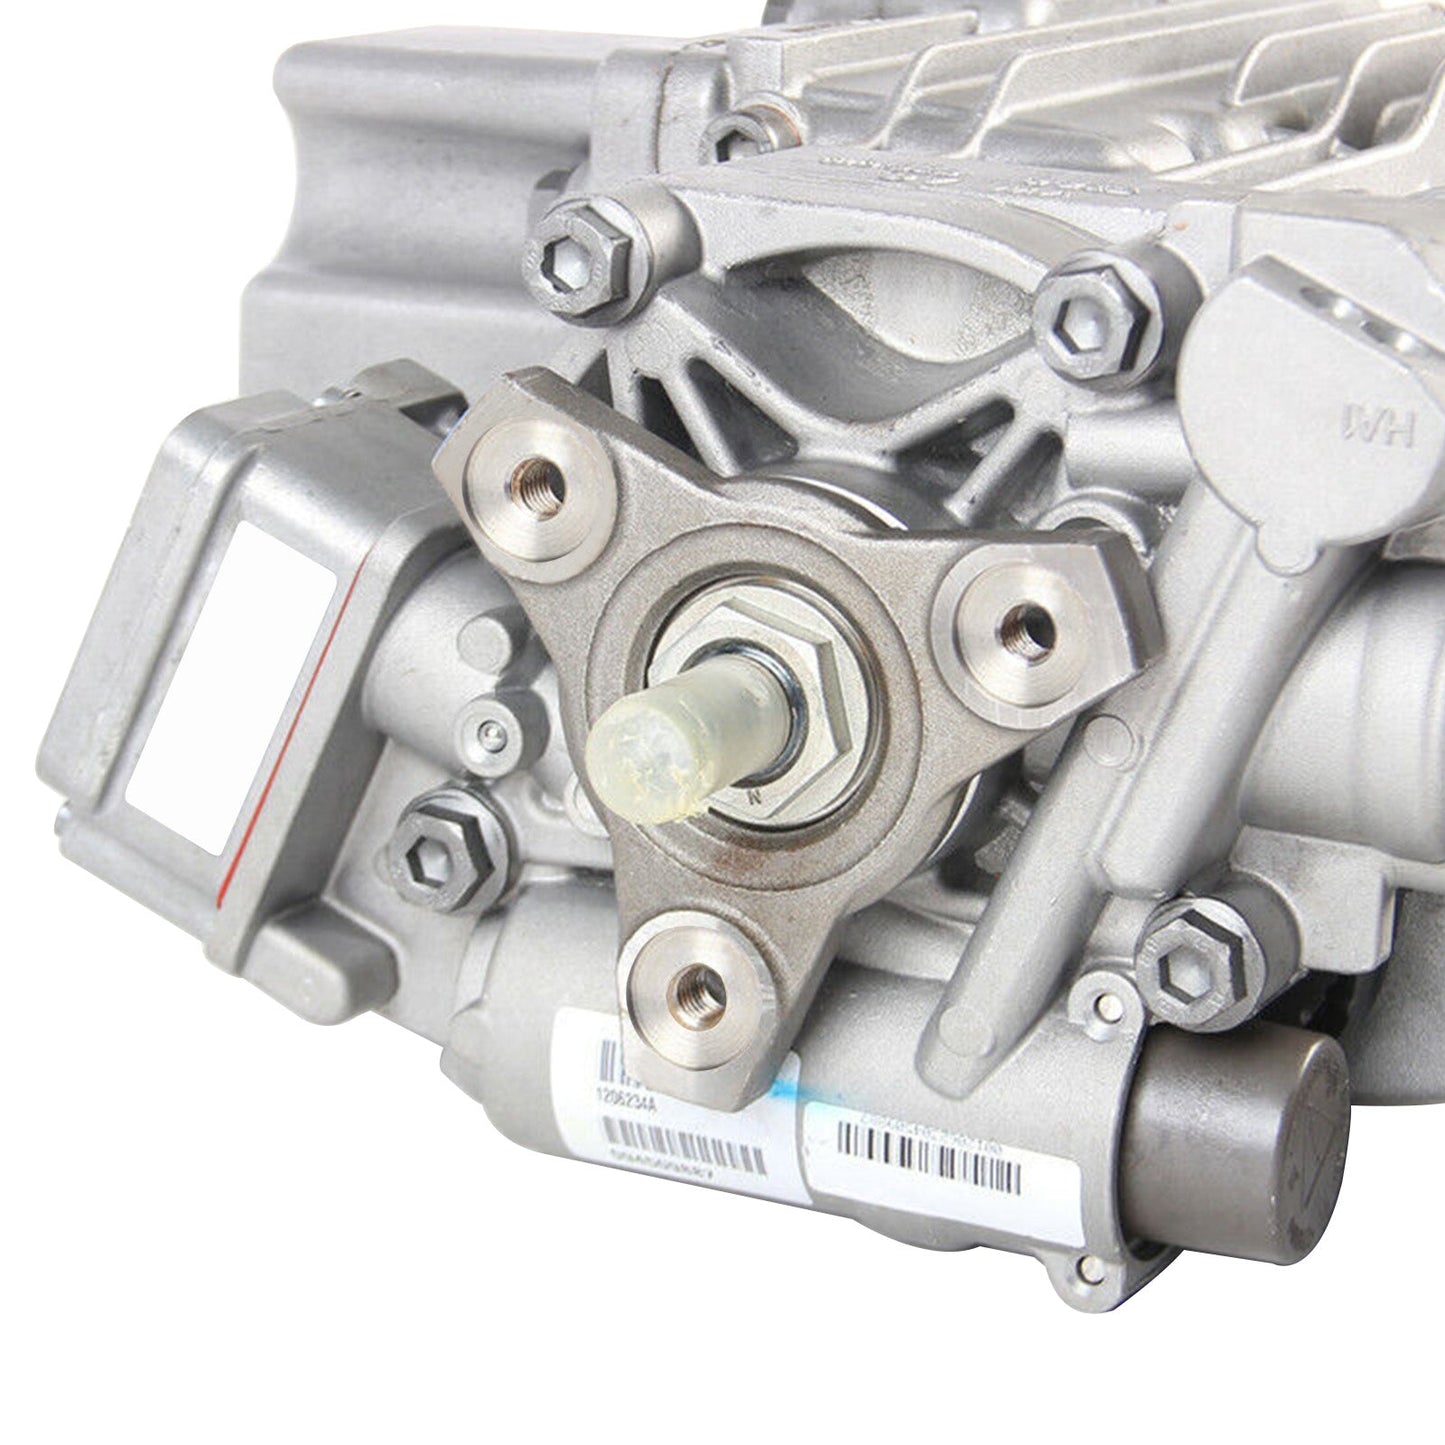 2009–2015 VW Passat 4Motion Differential Hinterachsgetriebe 4Motion 0AY525010L